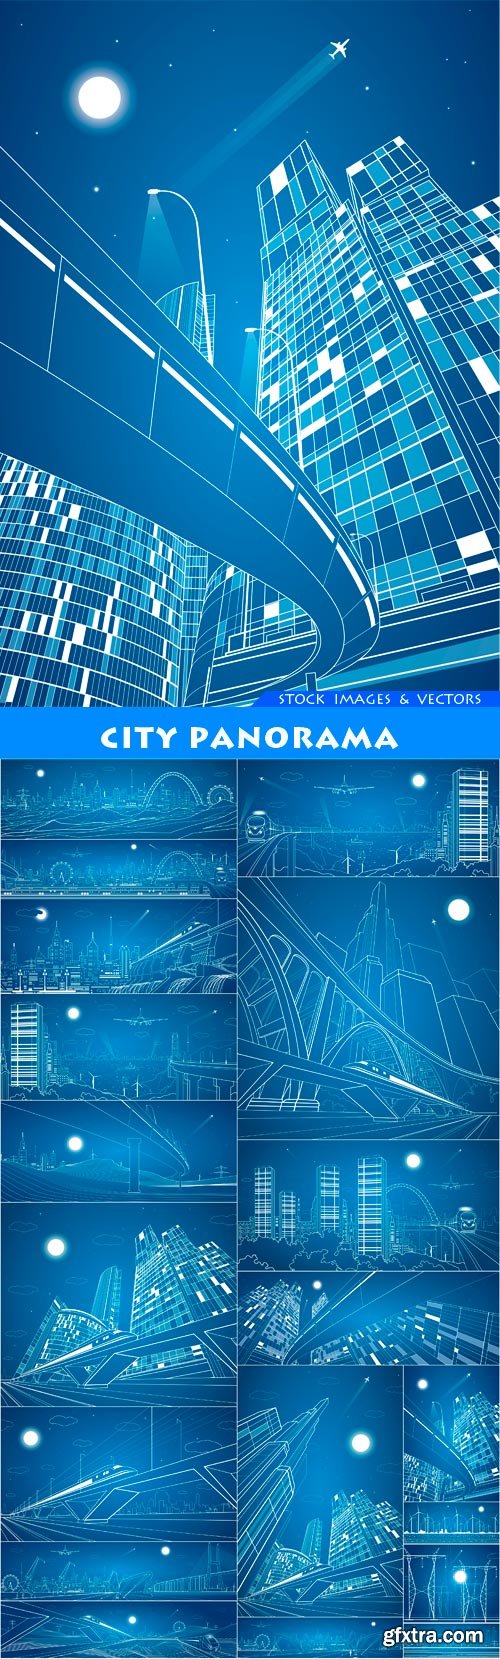 City panorama 19X EPS